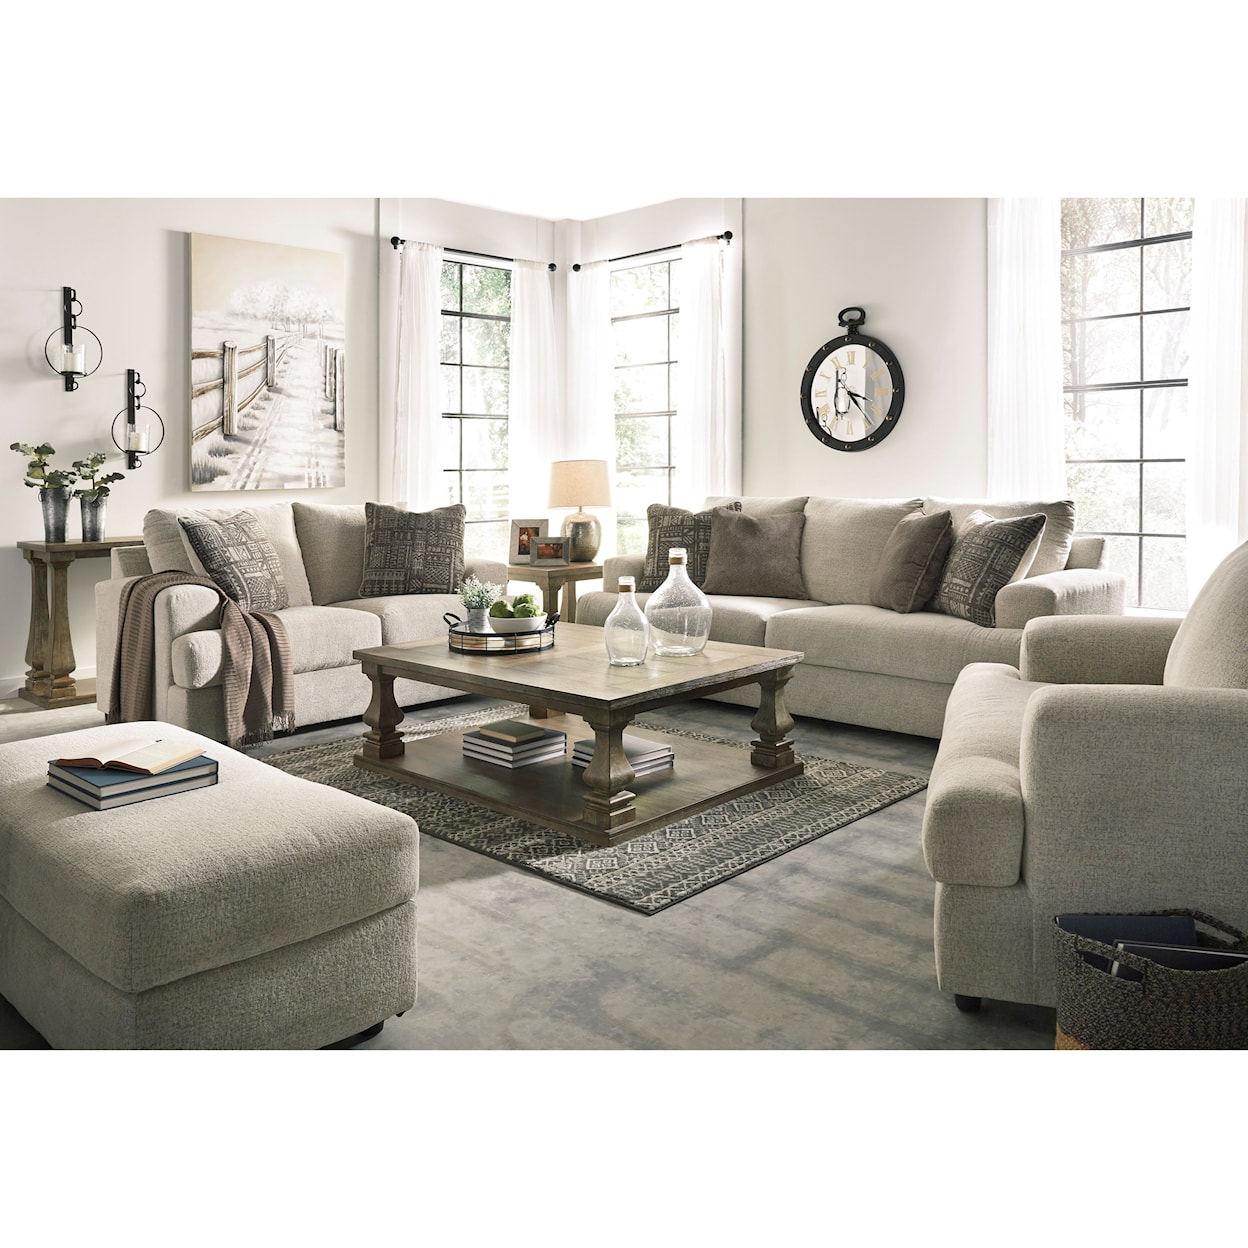 StyleLine Soletren Stationary Living Room Group